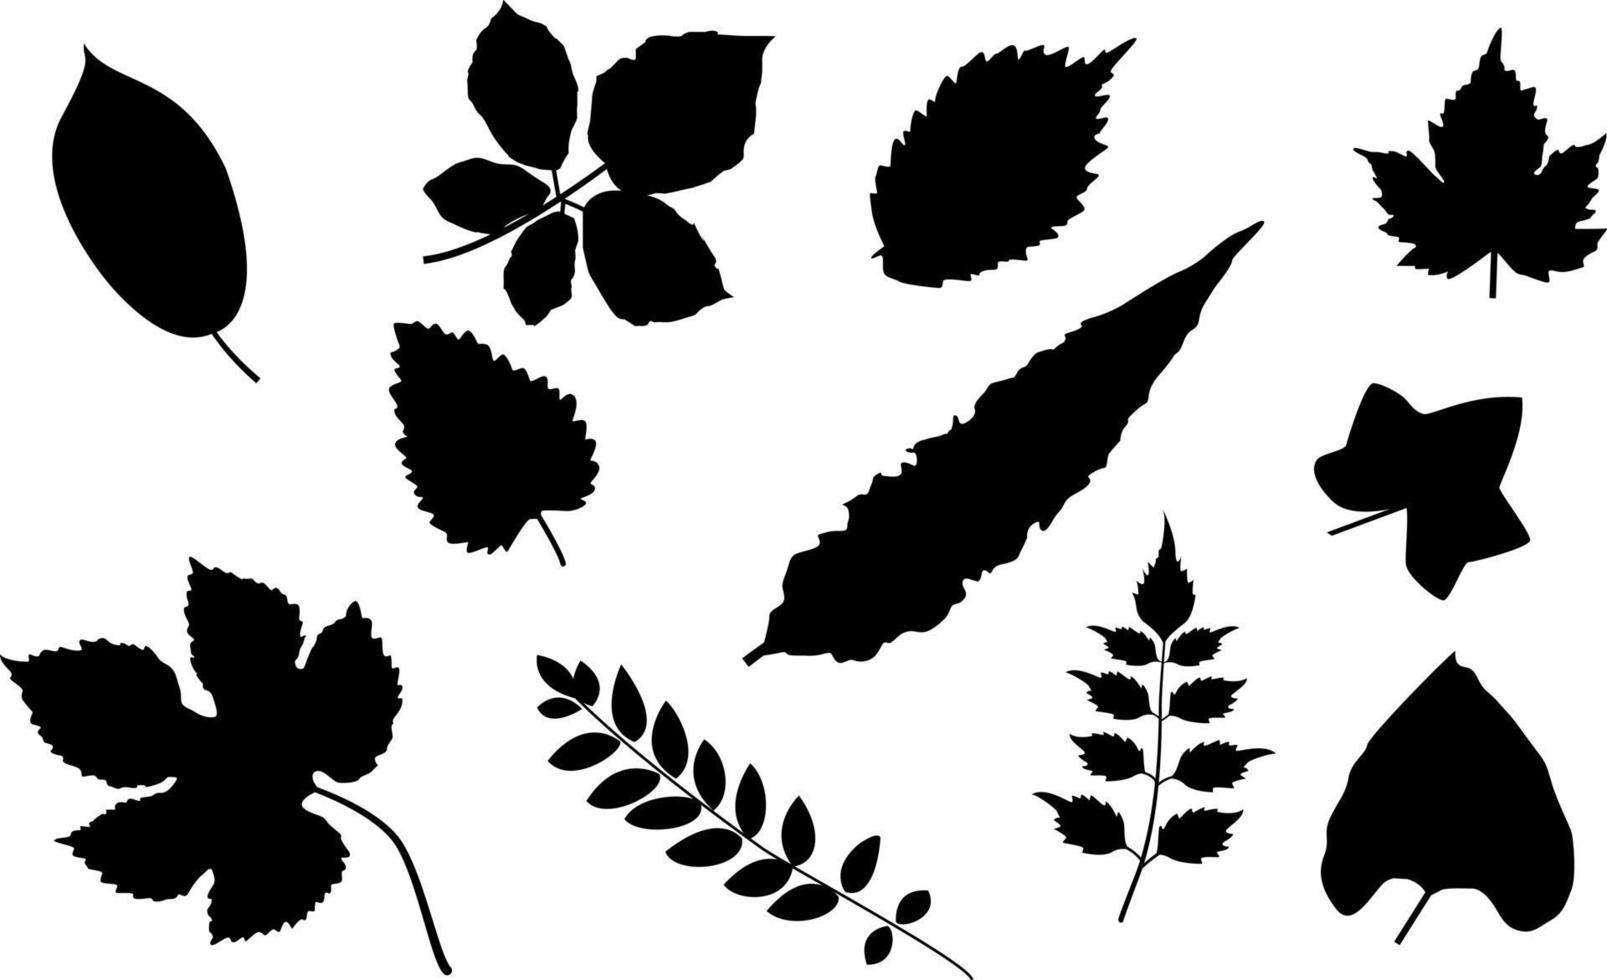 siluett olika typer av löv av vektordesign vektor